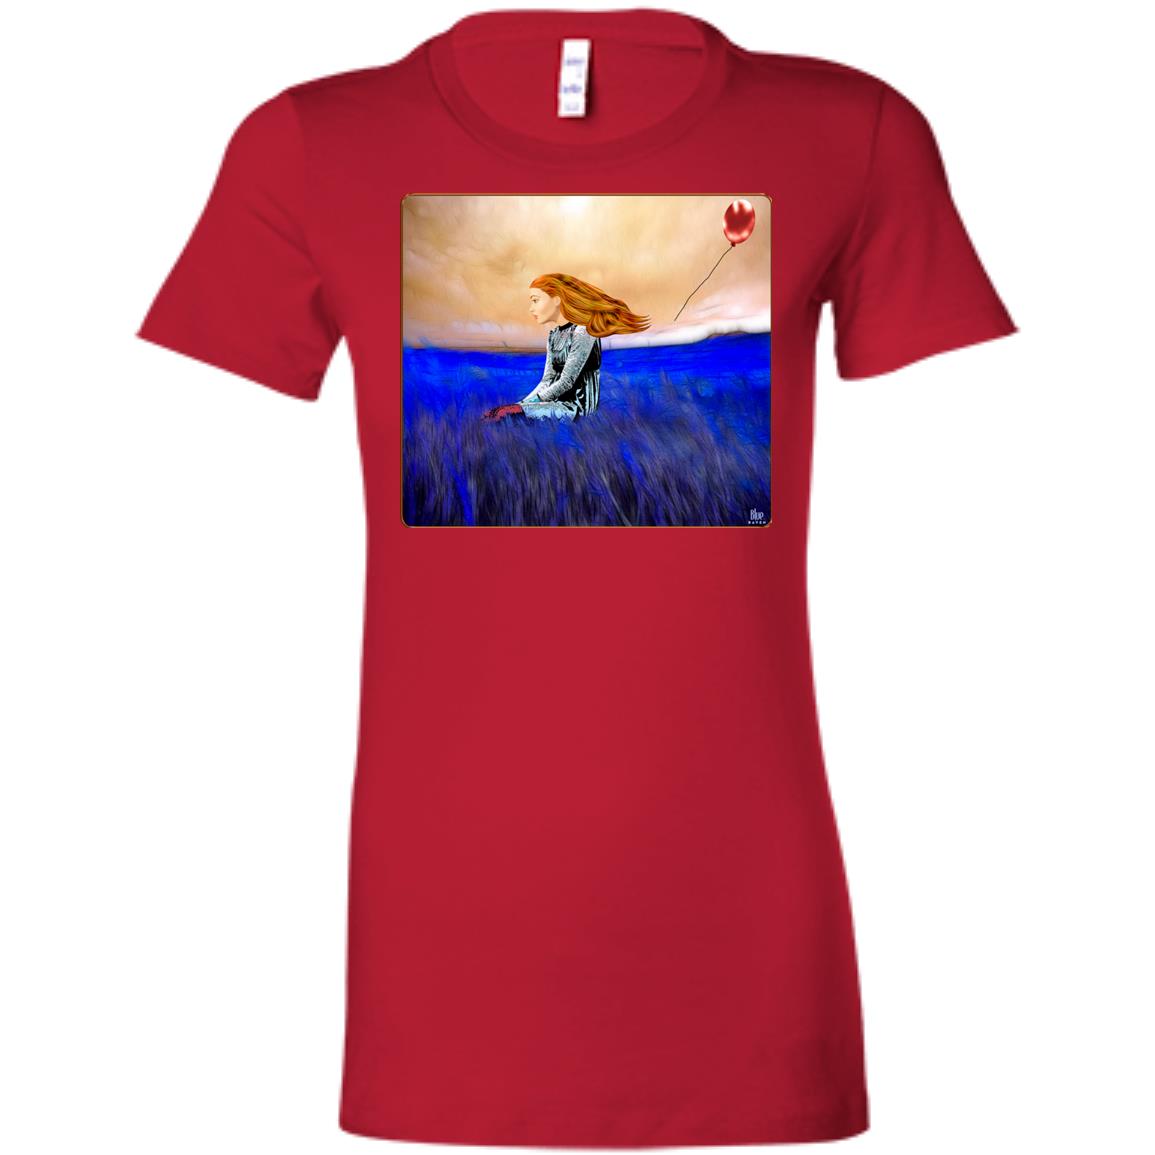 Lana - Women's Fitted T-Shirt